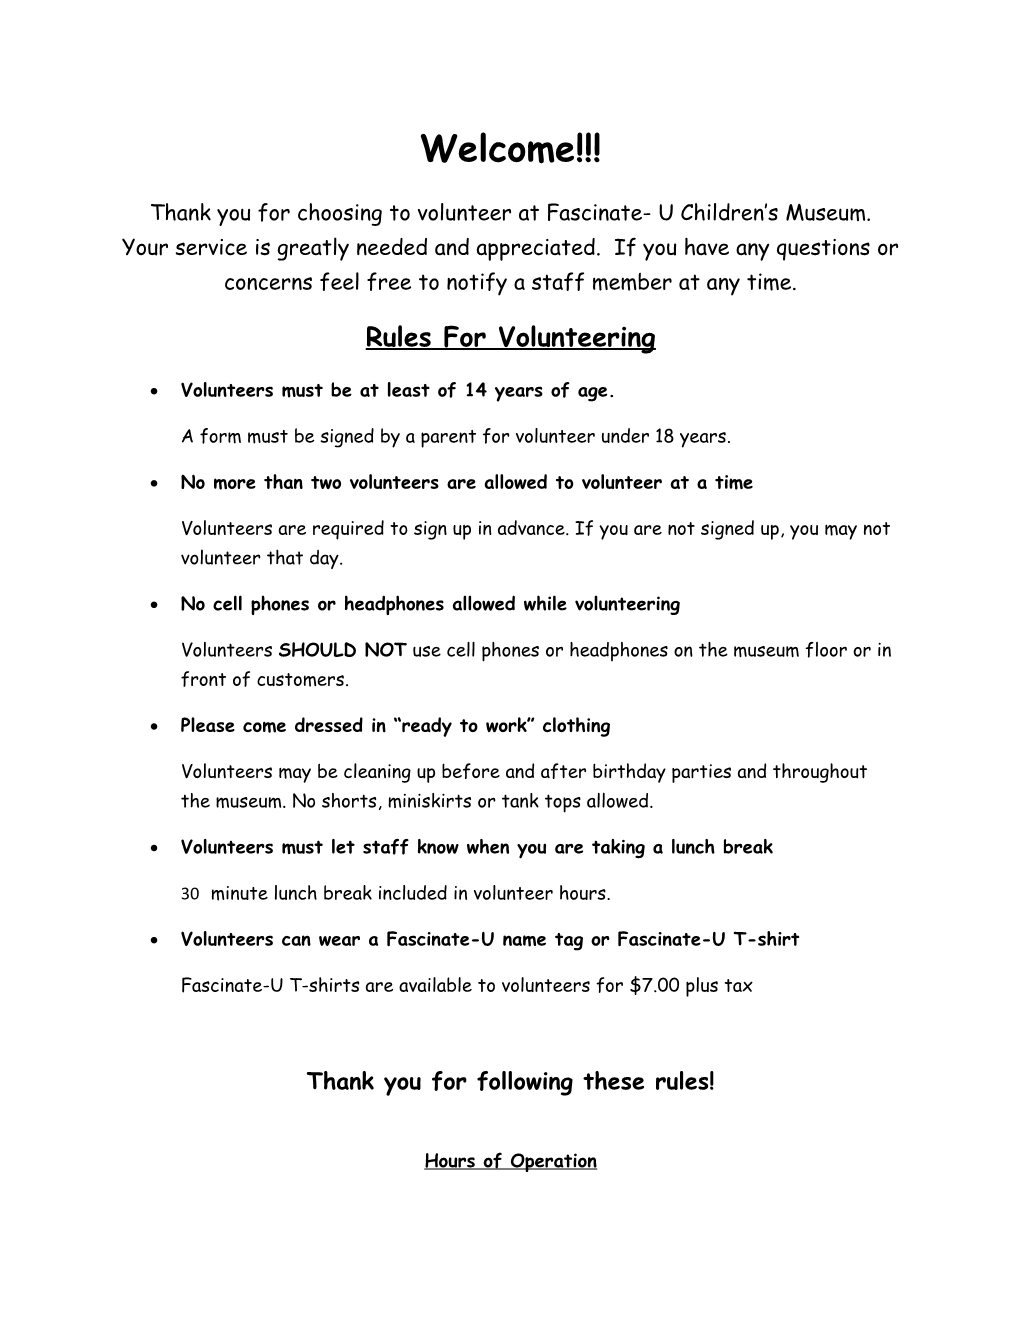 Rules for Volunteering